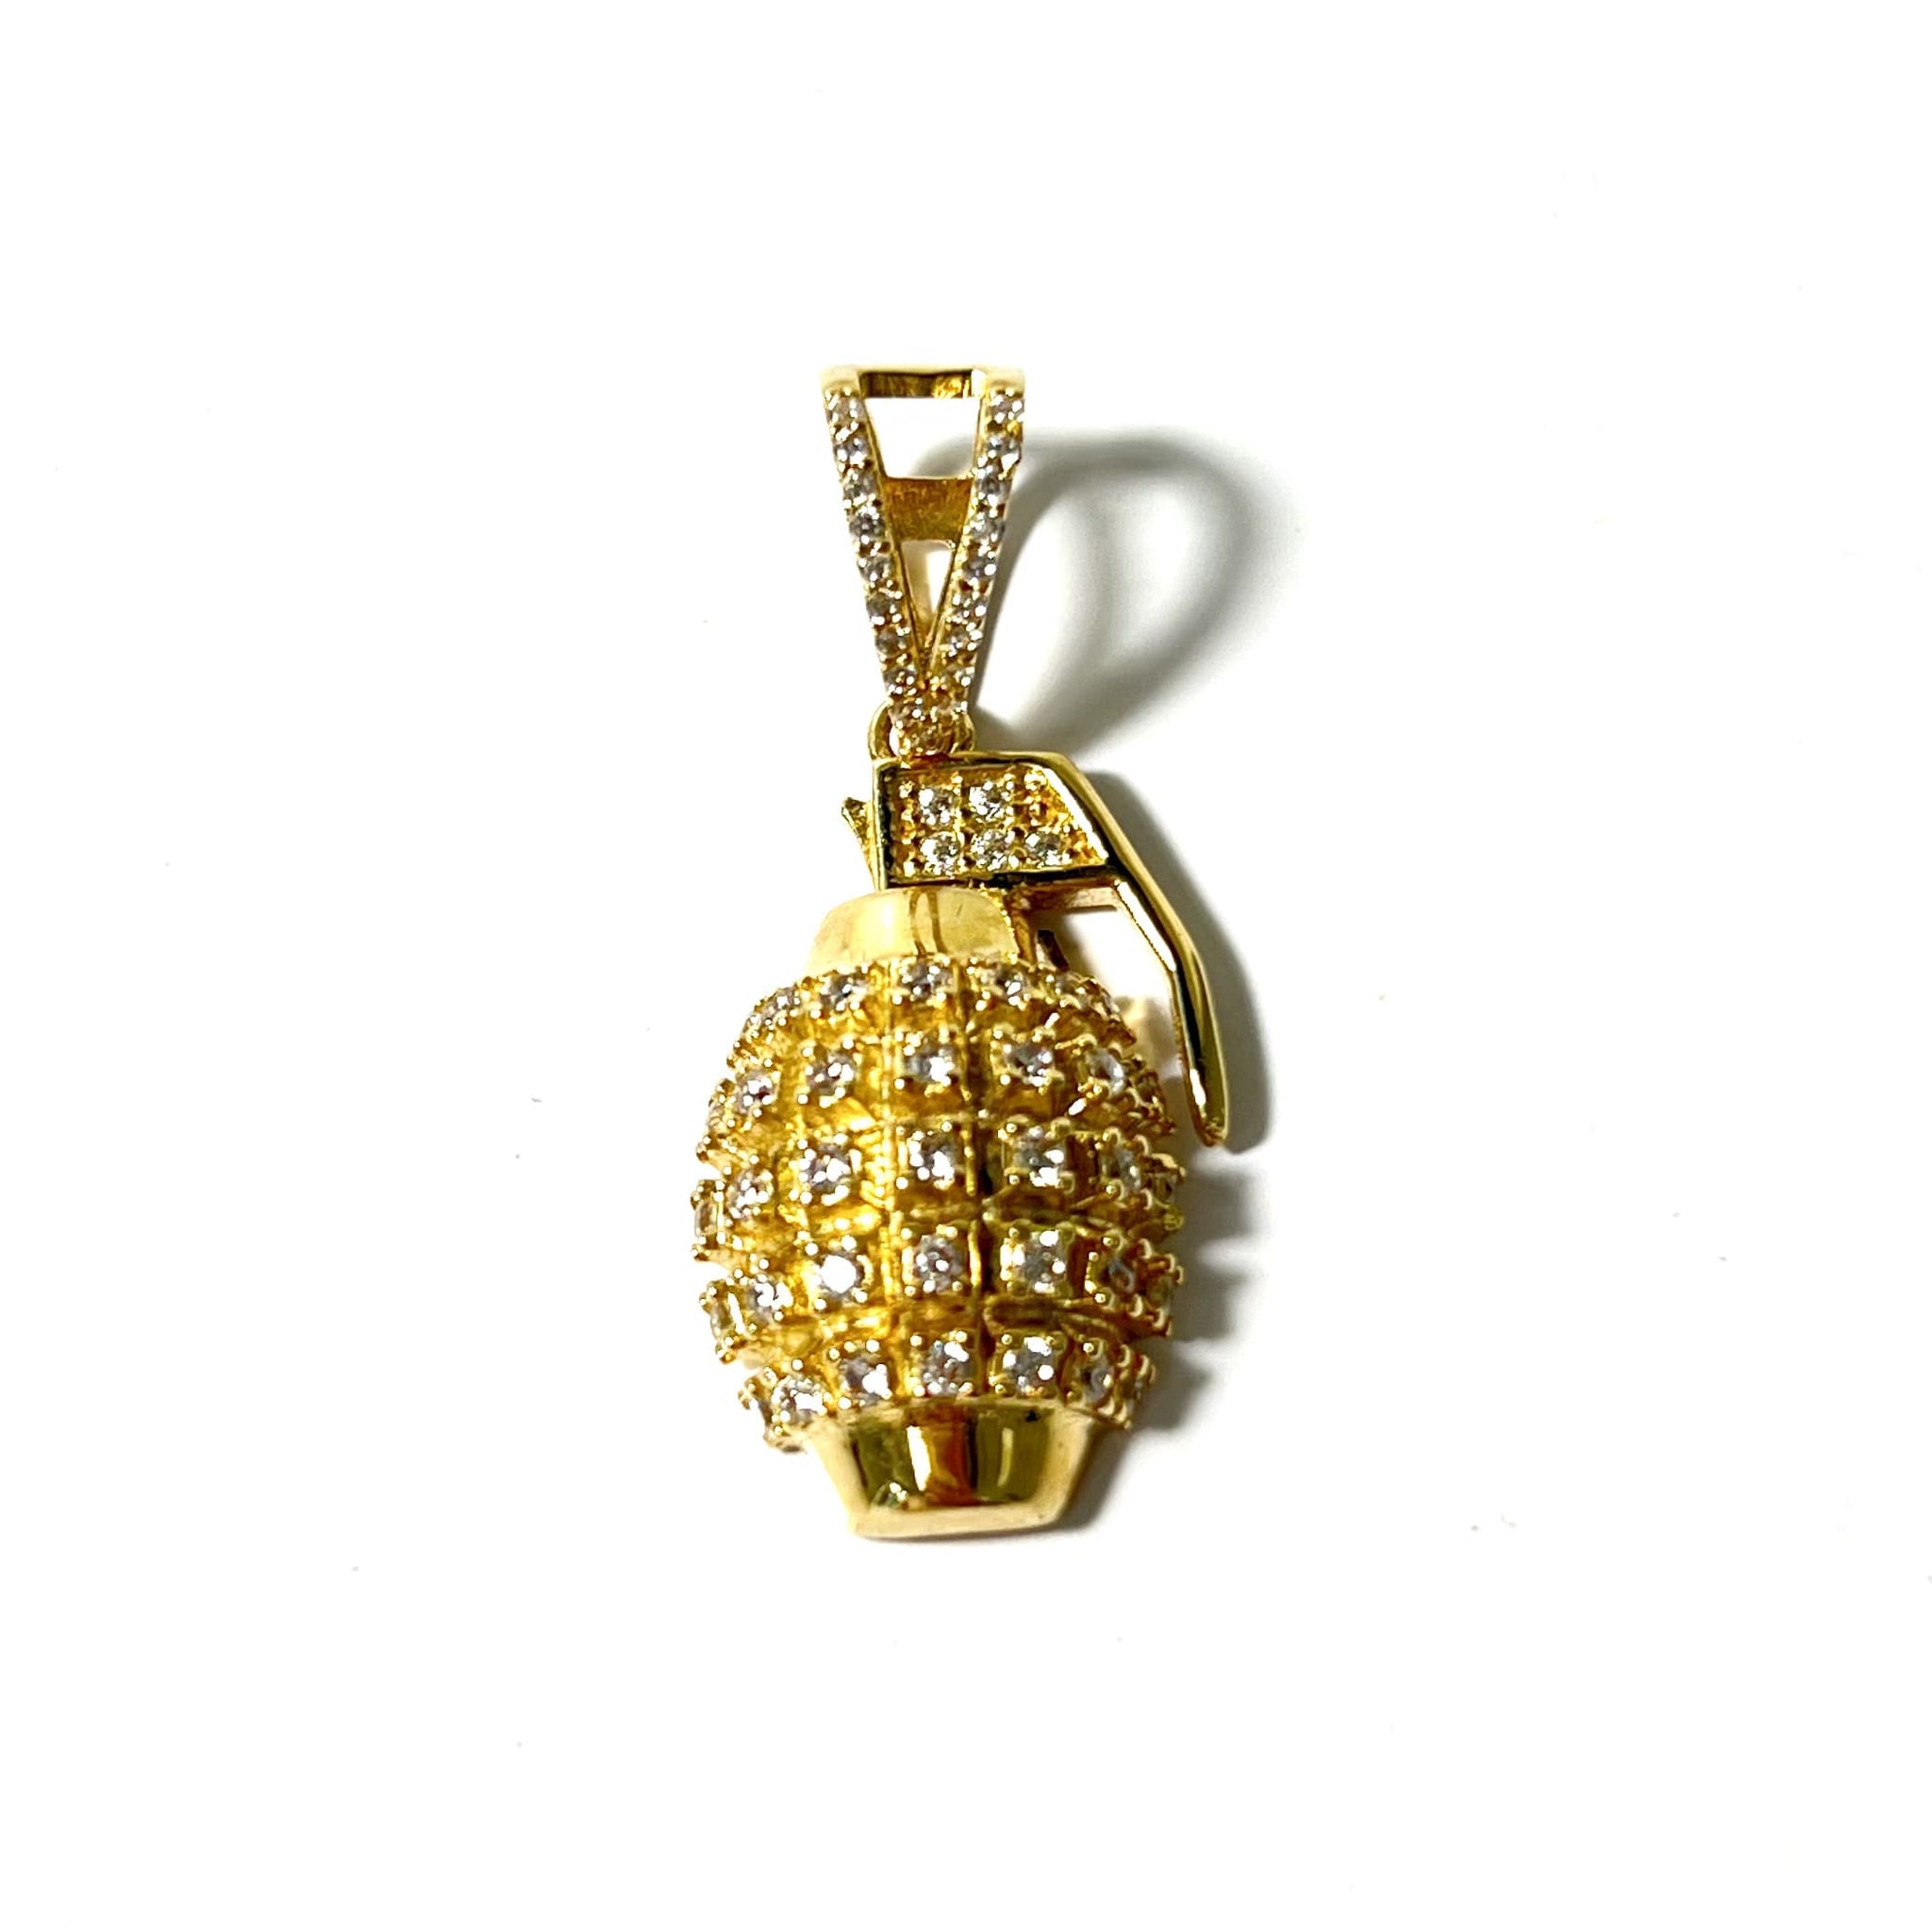 Grenade Pendant - 14 Carat Gold - 385